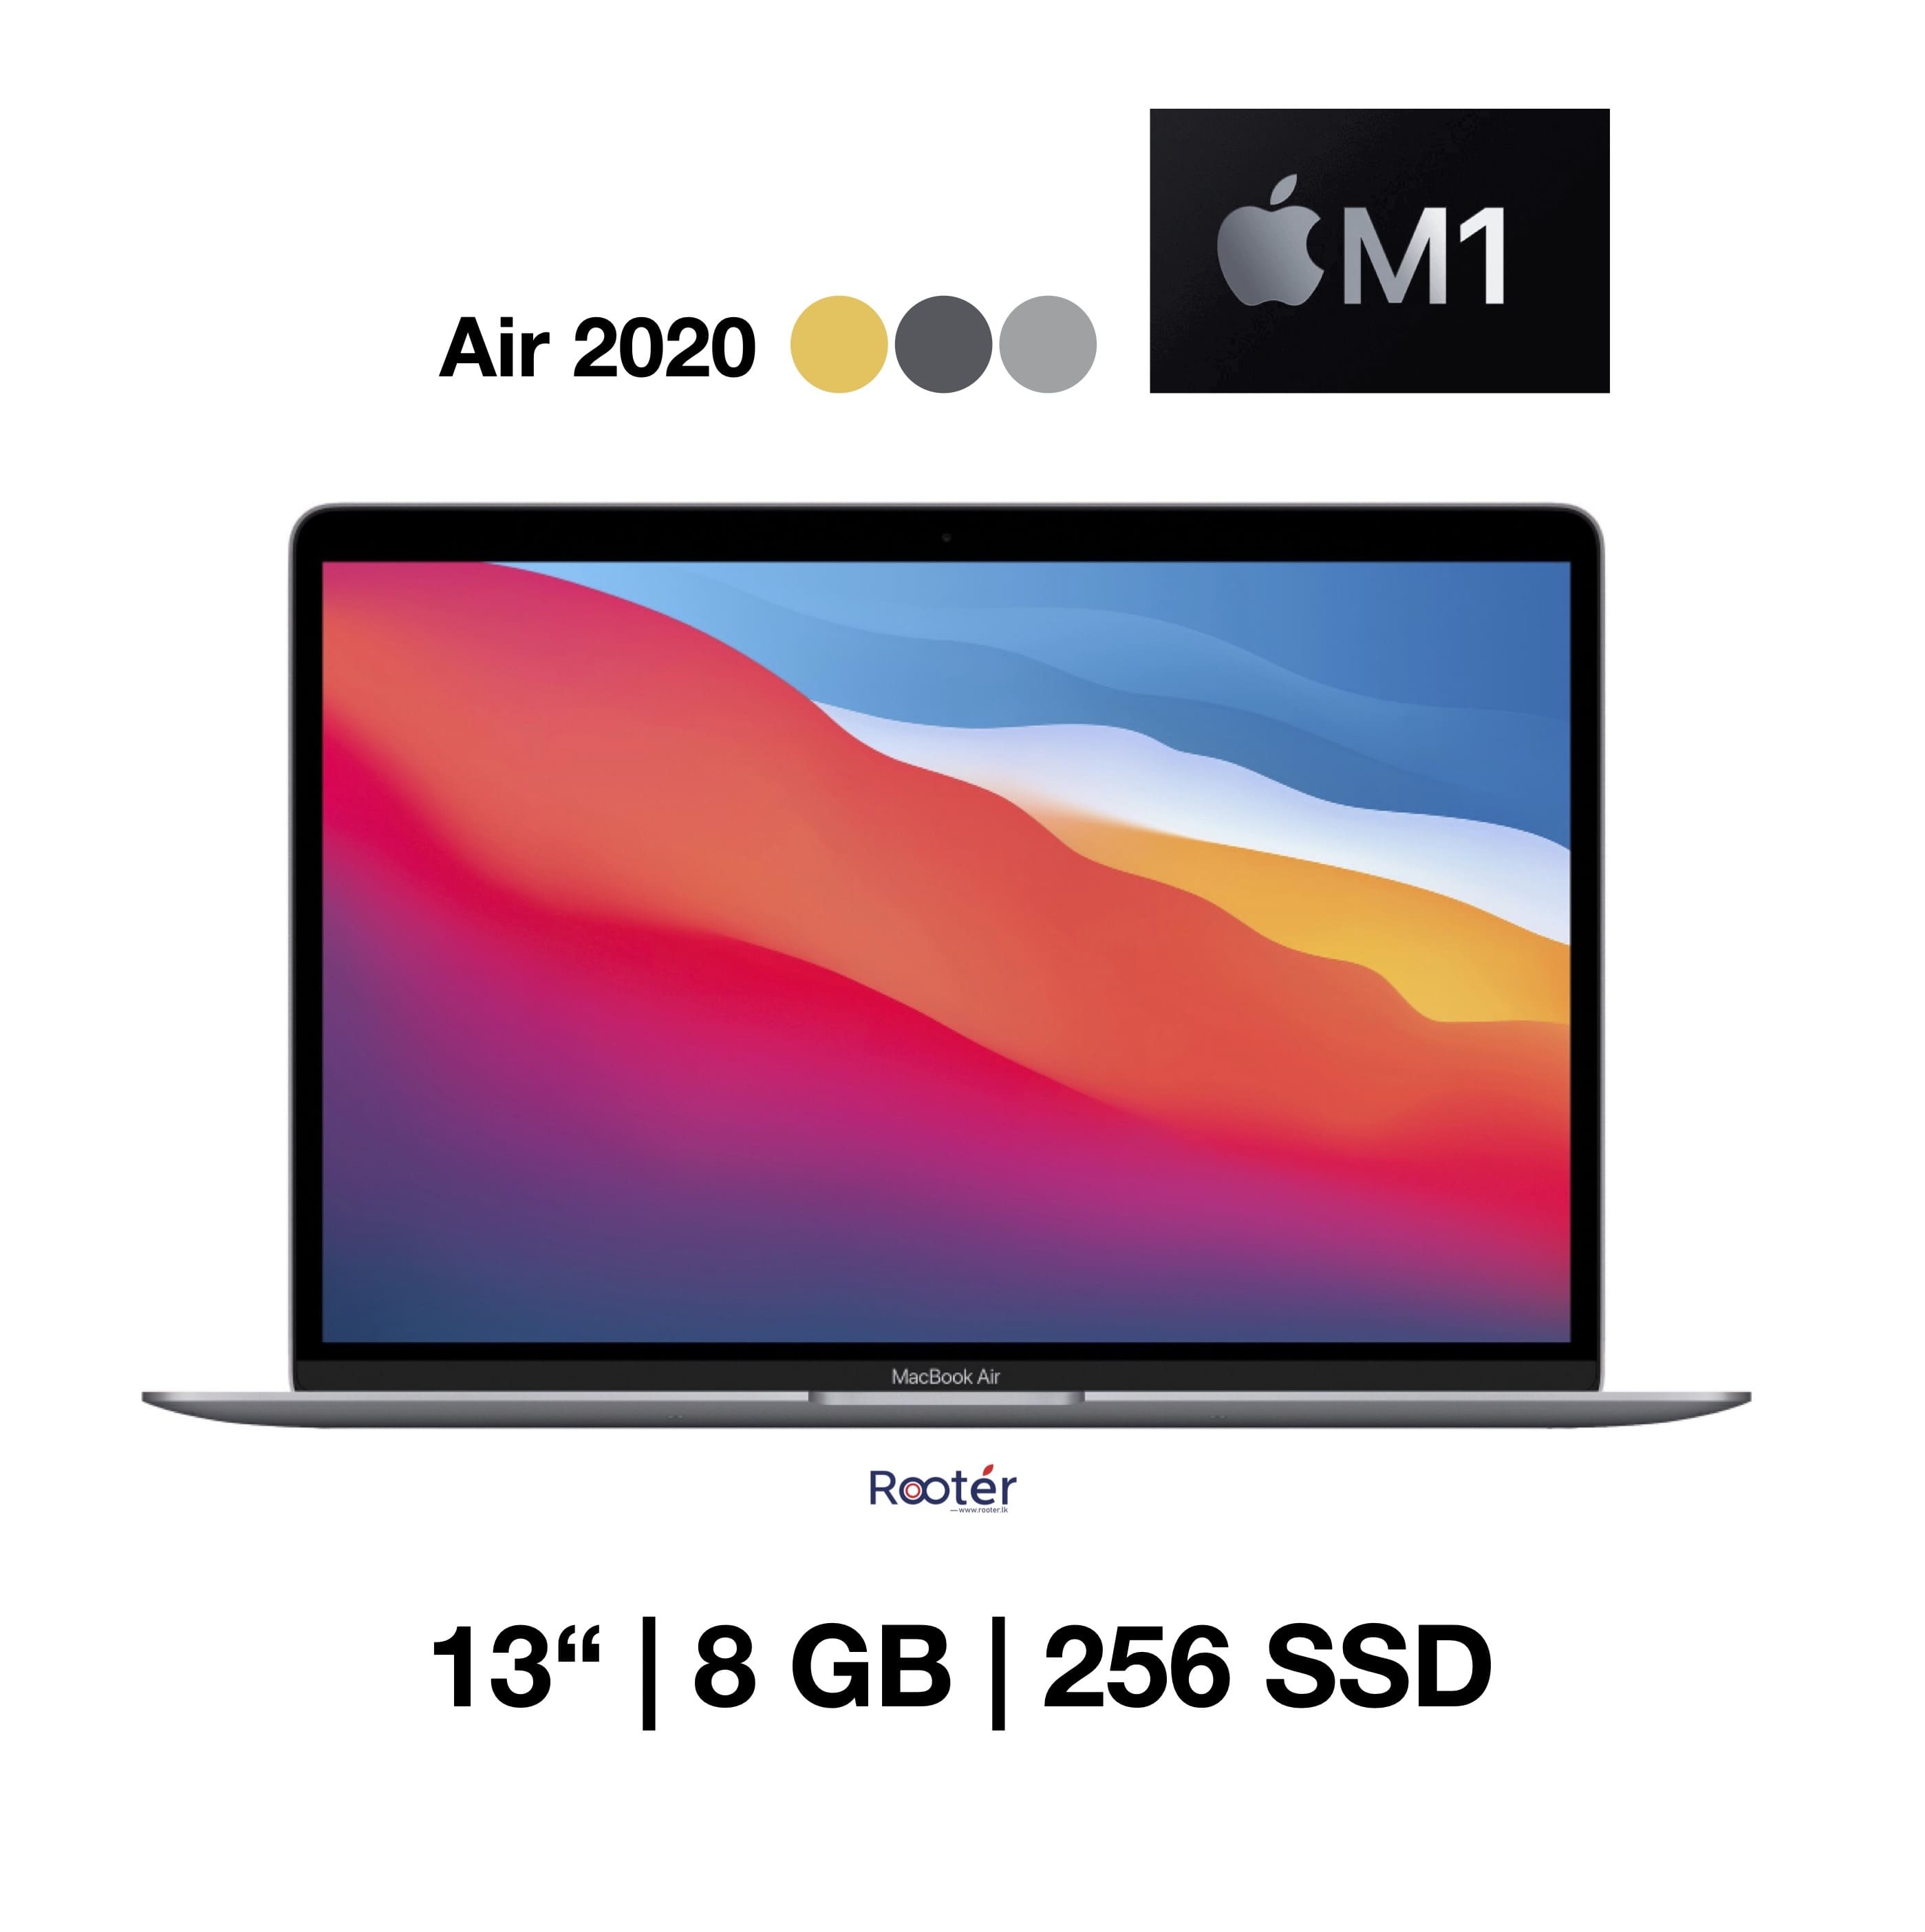 Apple Macbook Air M1 8GB 256GB 13 inch